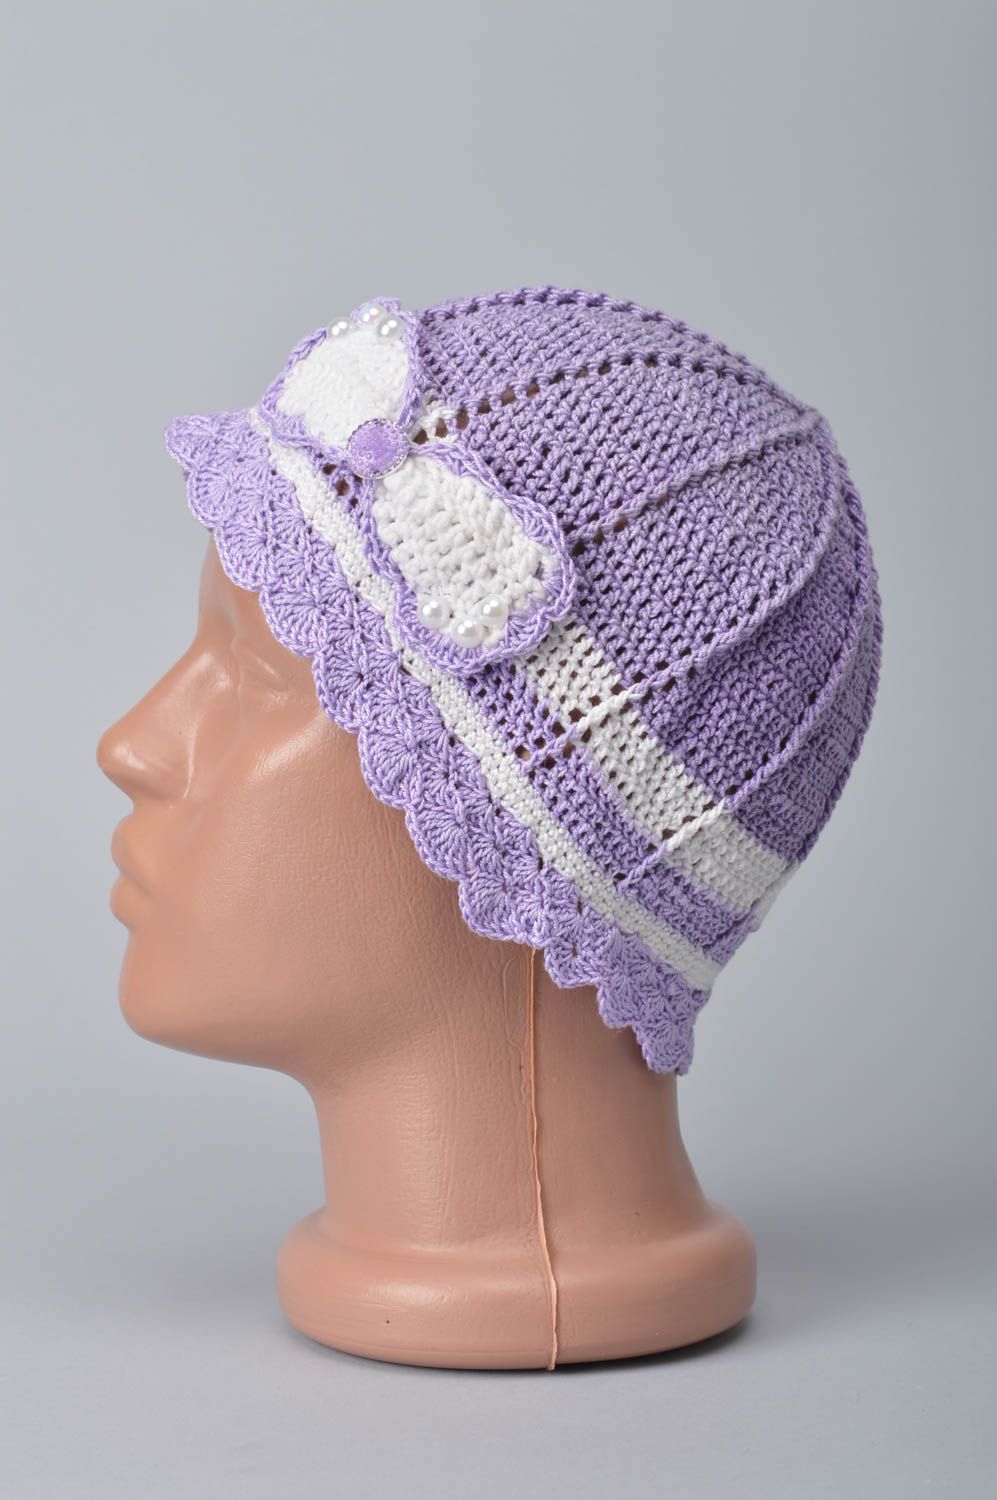 Unusual handmade crochet hat designs cute hats designer accessories for girls photo 3